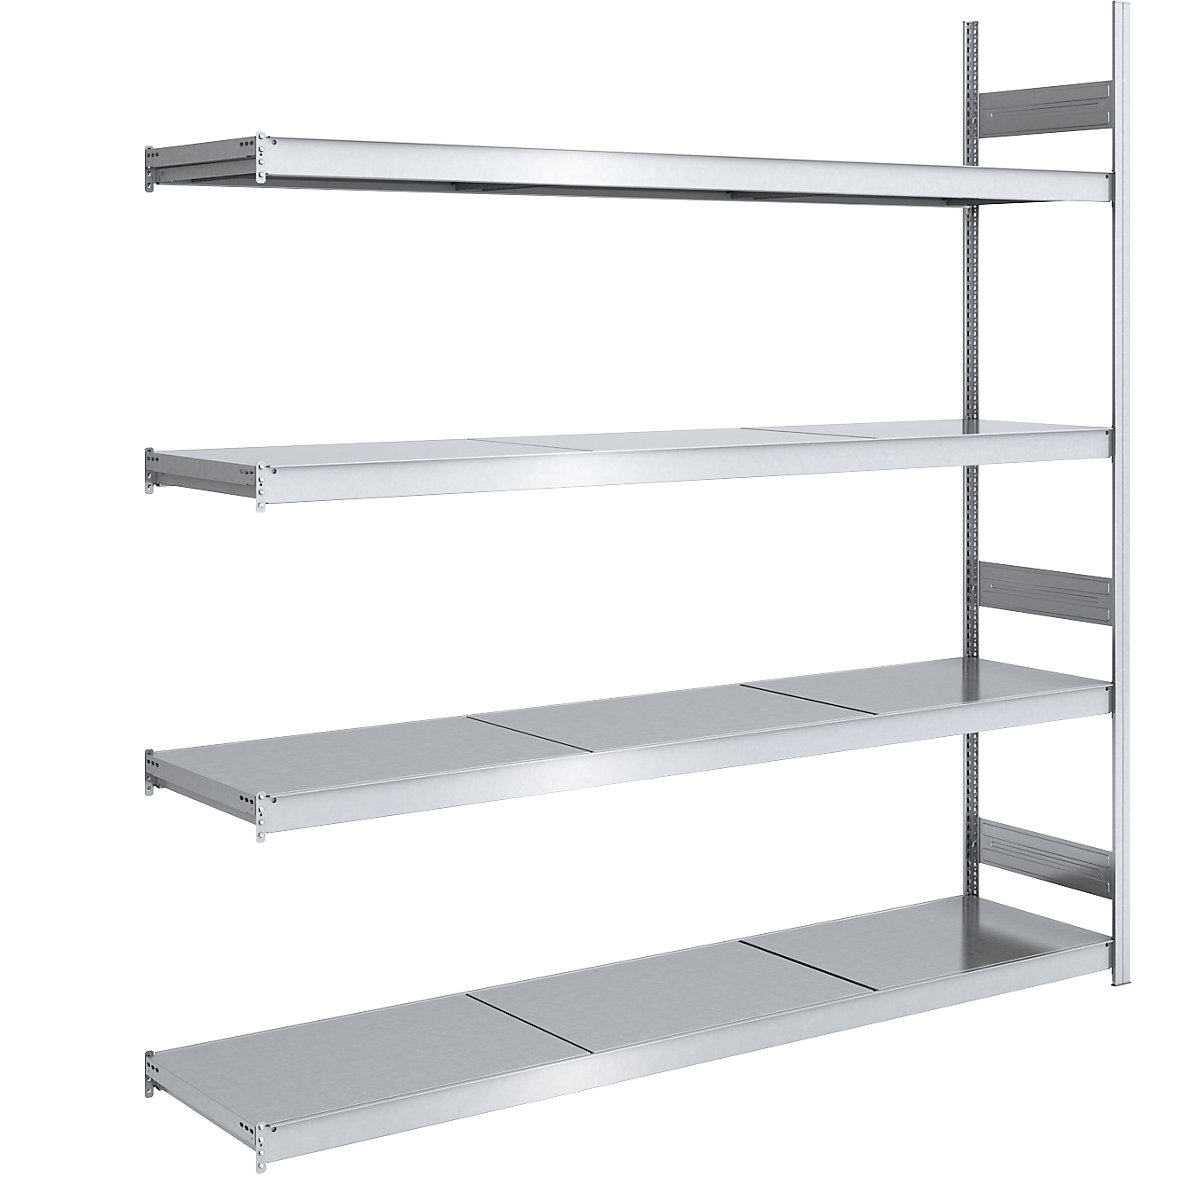 Wide span boltless shelving unit, zinc plated – hofe, shelf WxD 2250 x 600 mm, extension shelf unit, 4 steel shelves, height 2500 mm